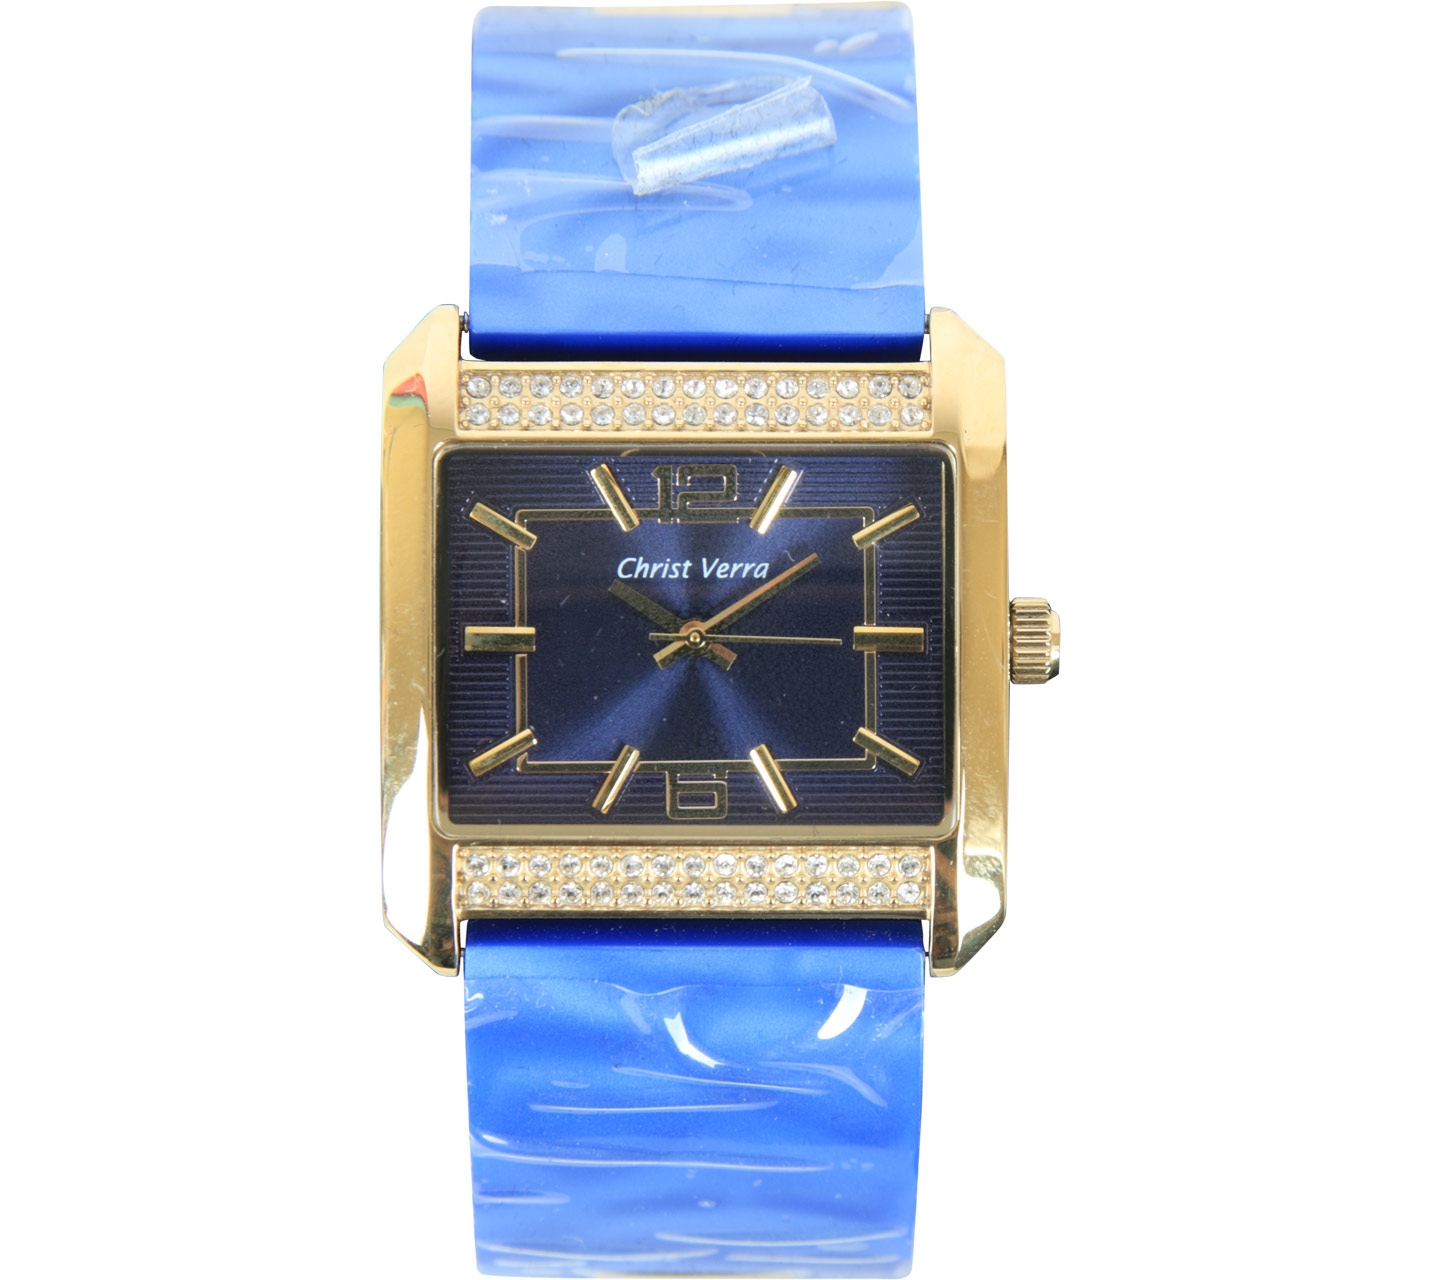 Christ Verra Gold And Blue Watch